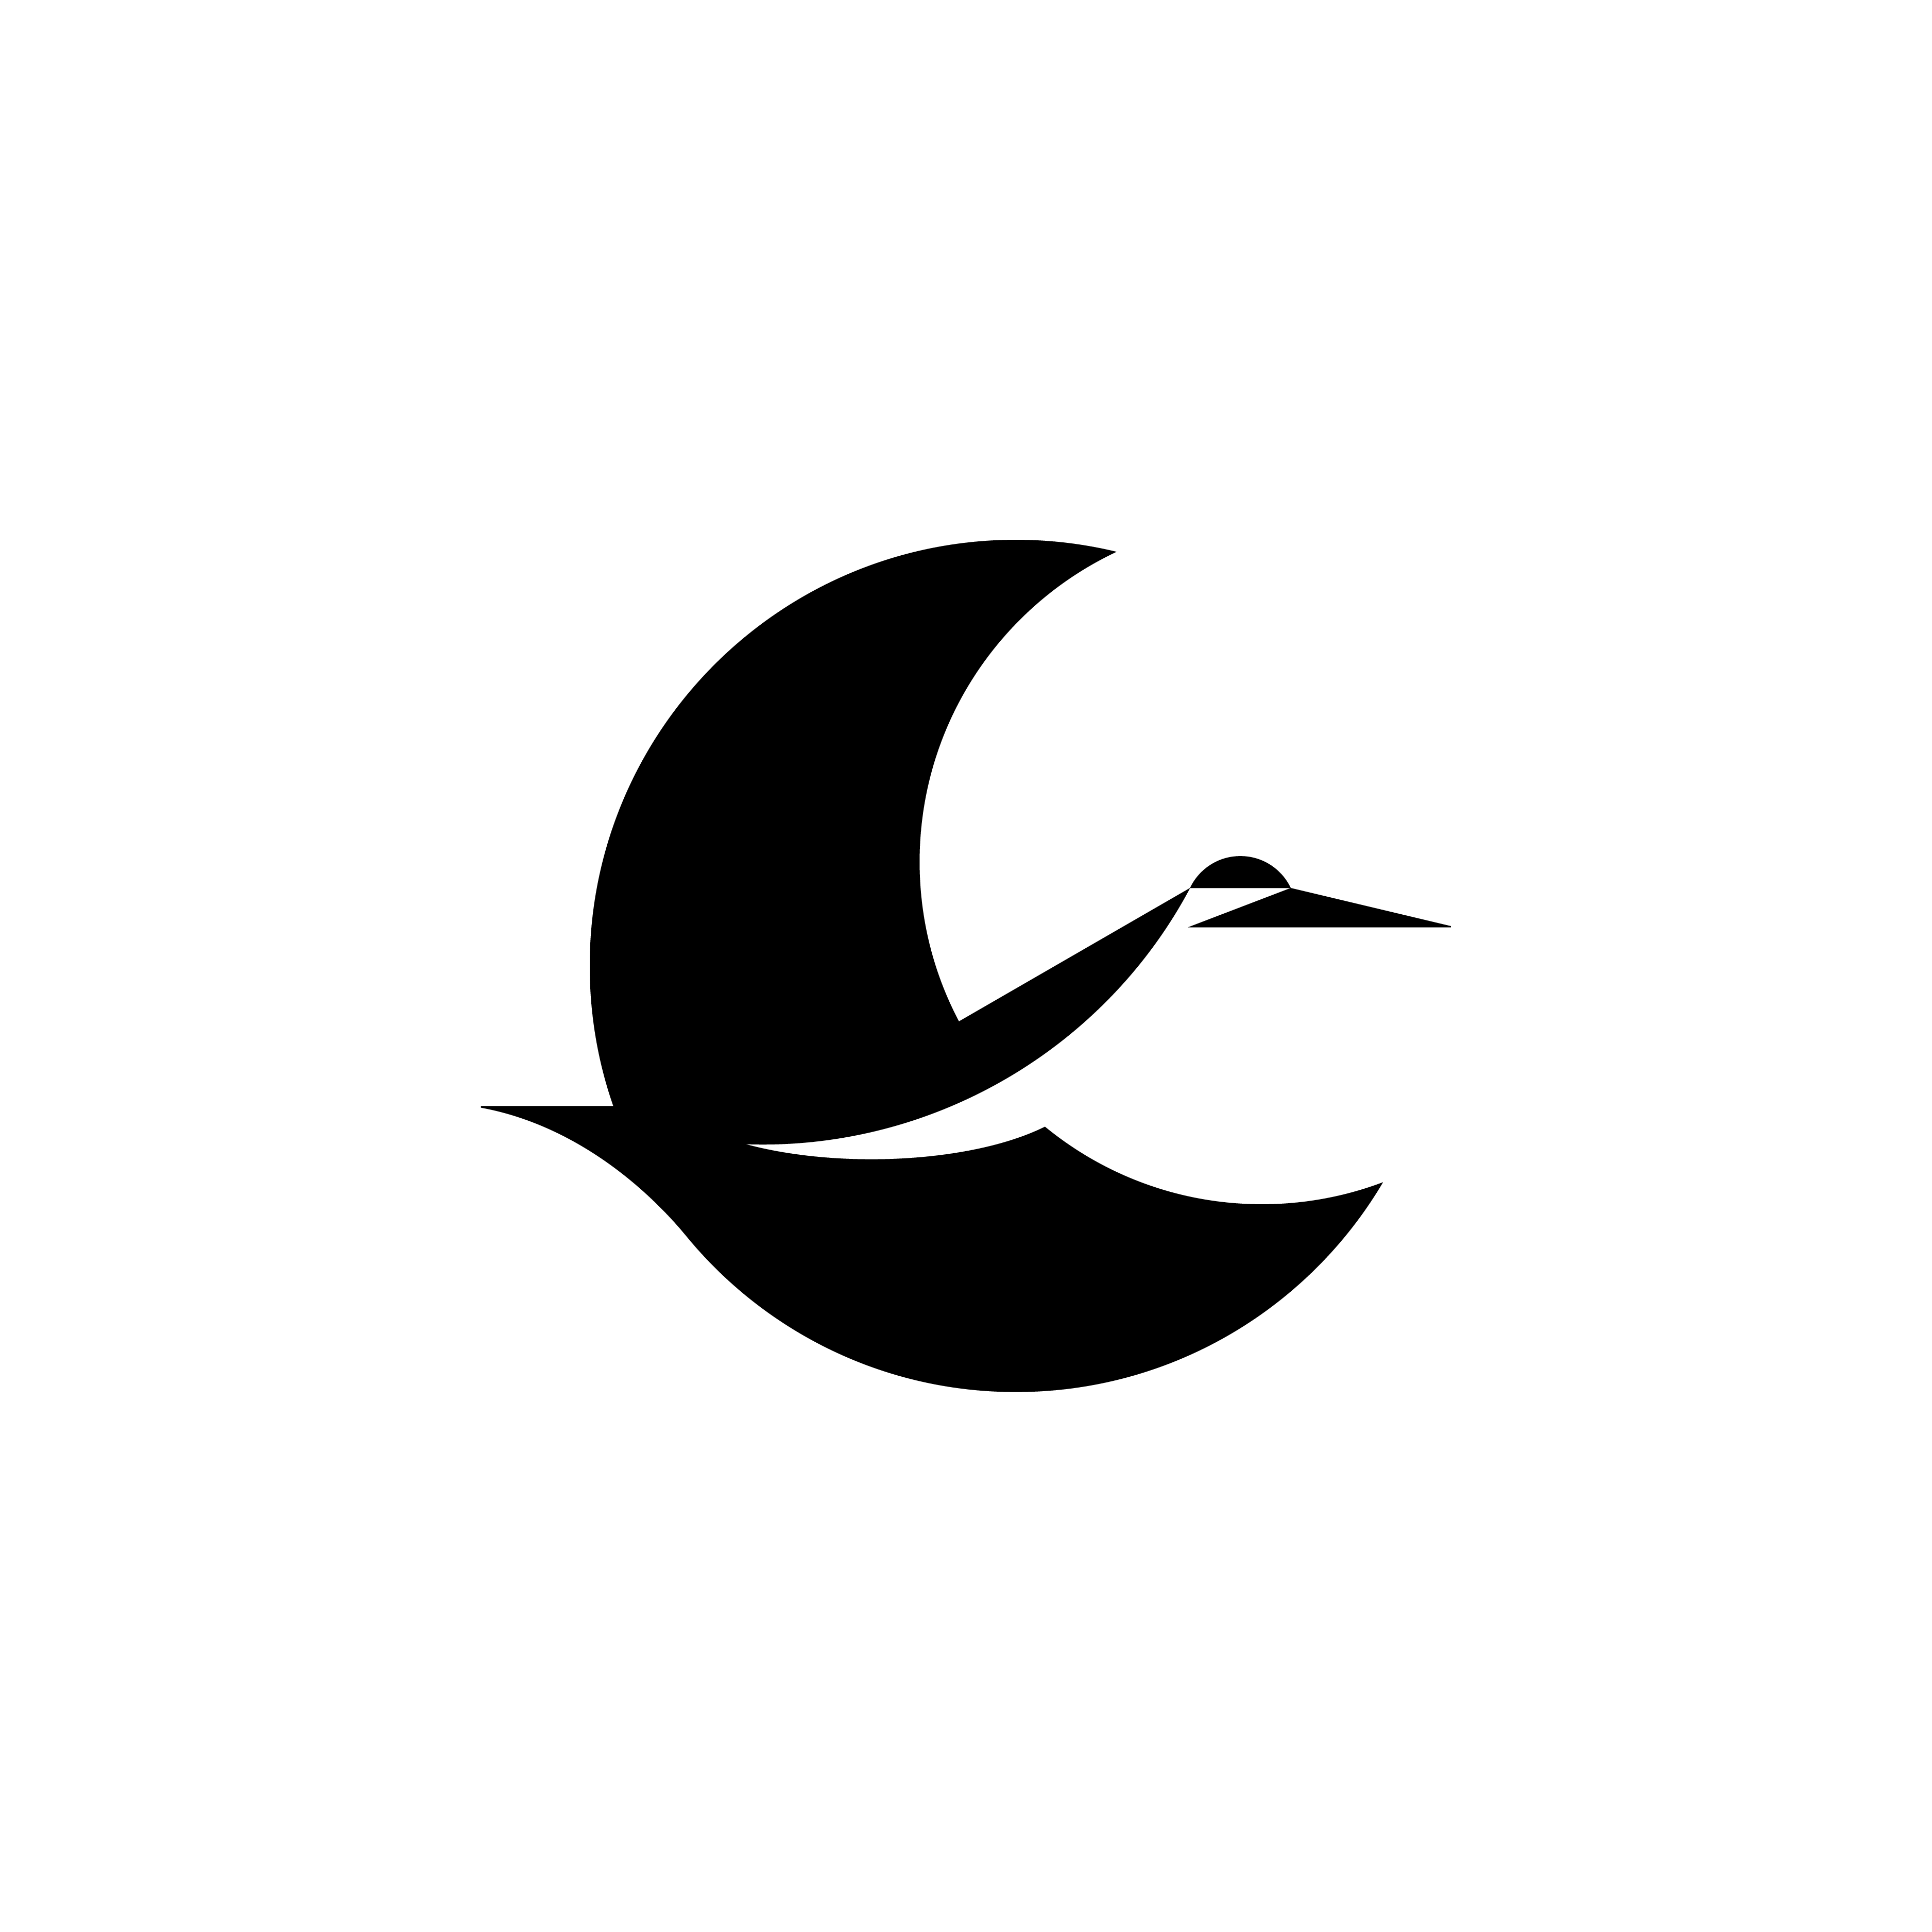 Crane logo design by logo designer Freelancer for your inspiration and for the worlds largest logo competition